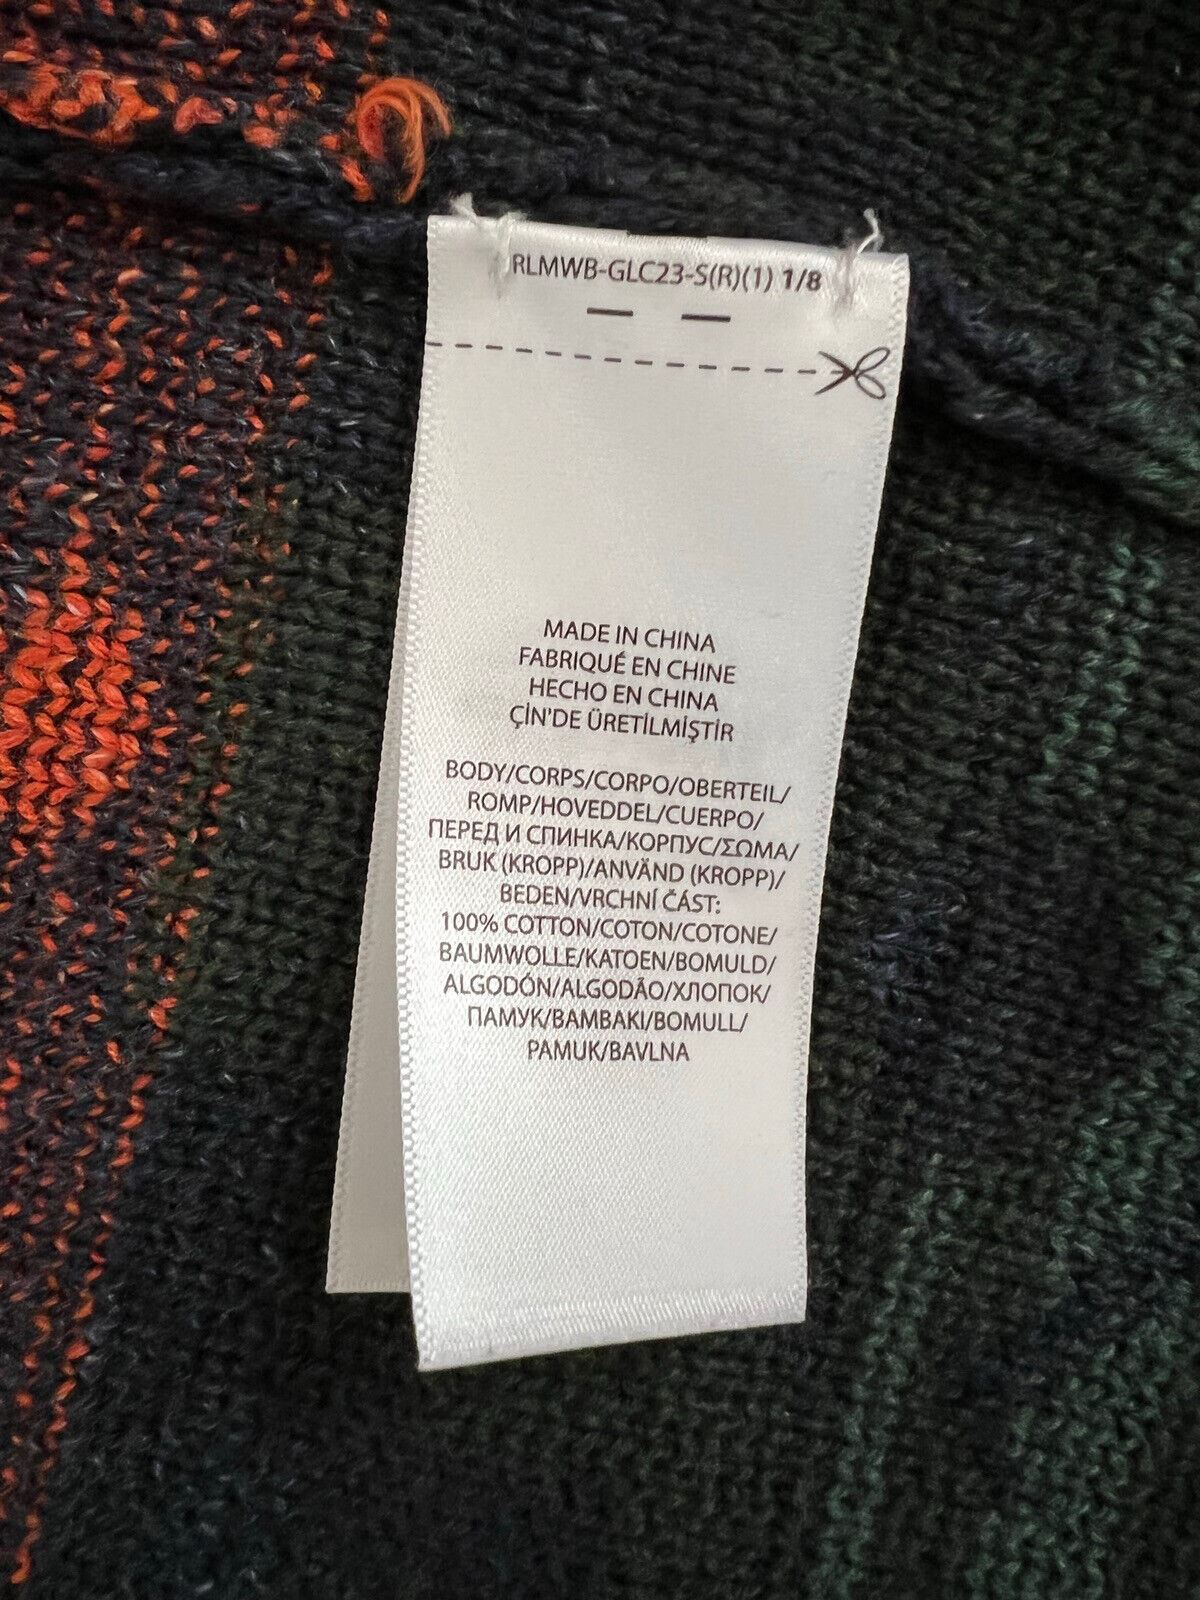 NWT $248 Polo Ralph Lauren Men's Cardigan Sweater Size S